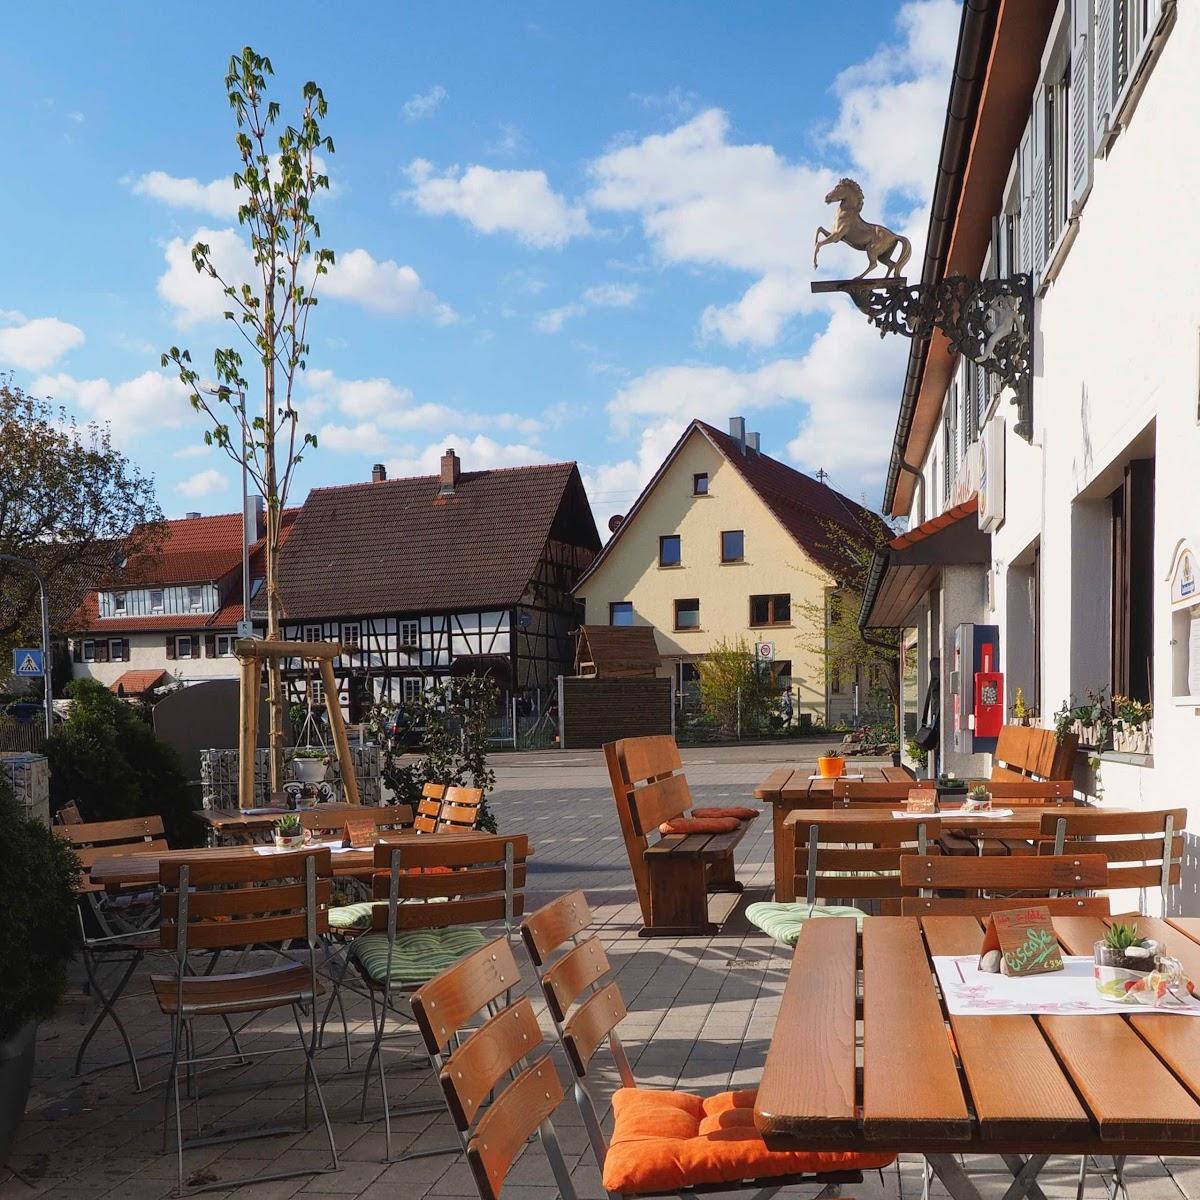 Restaurant "Miel" in  Alfdorf